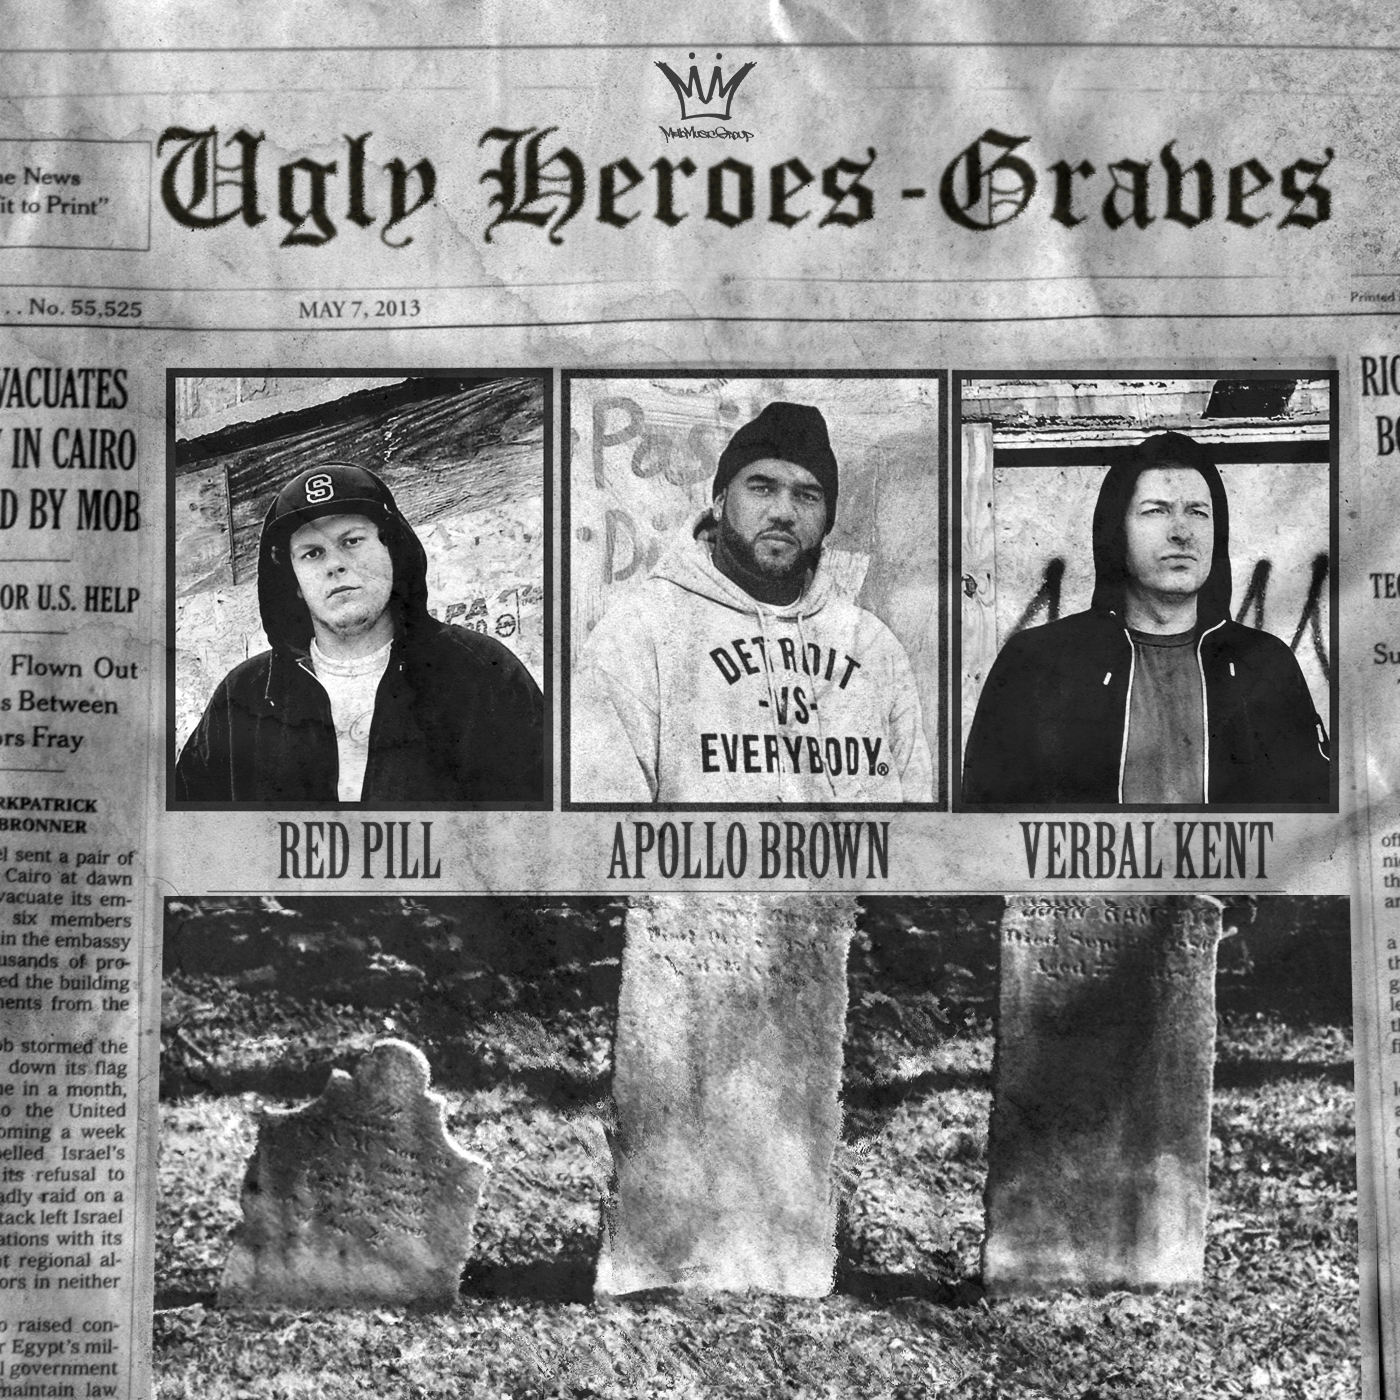 Ugly Heros - "Graves"